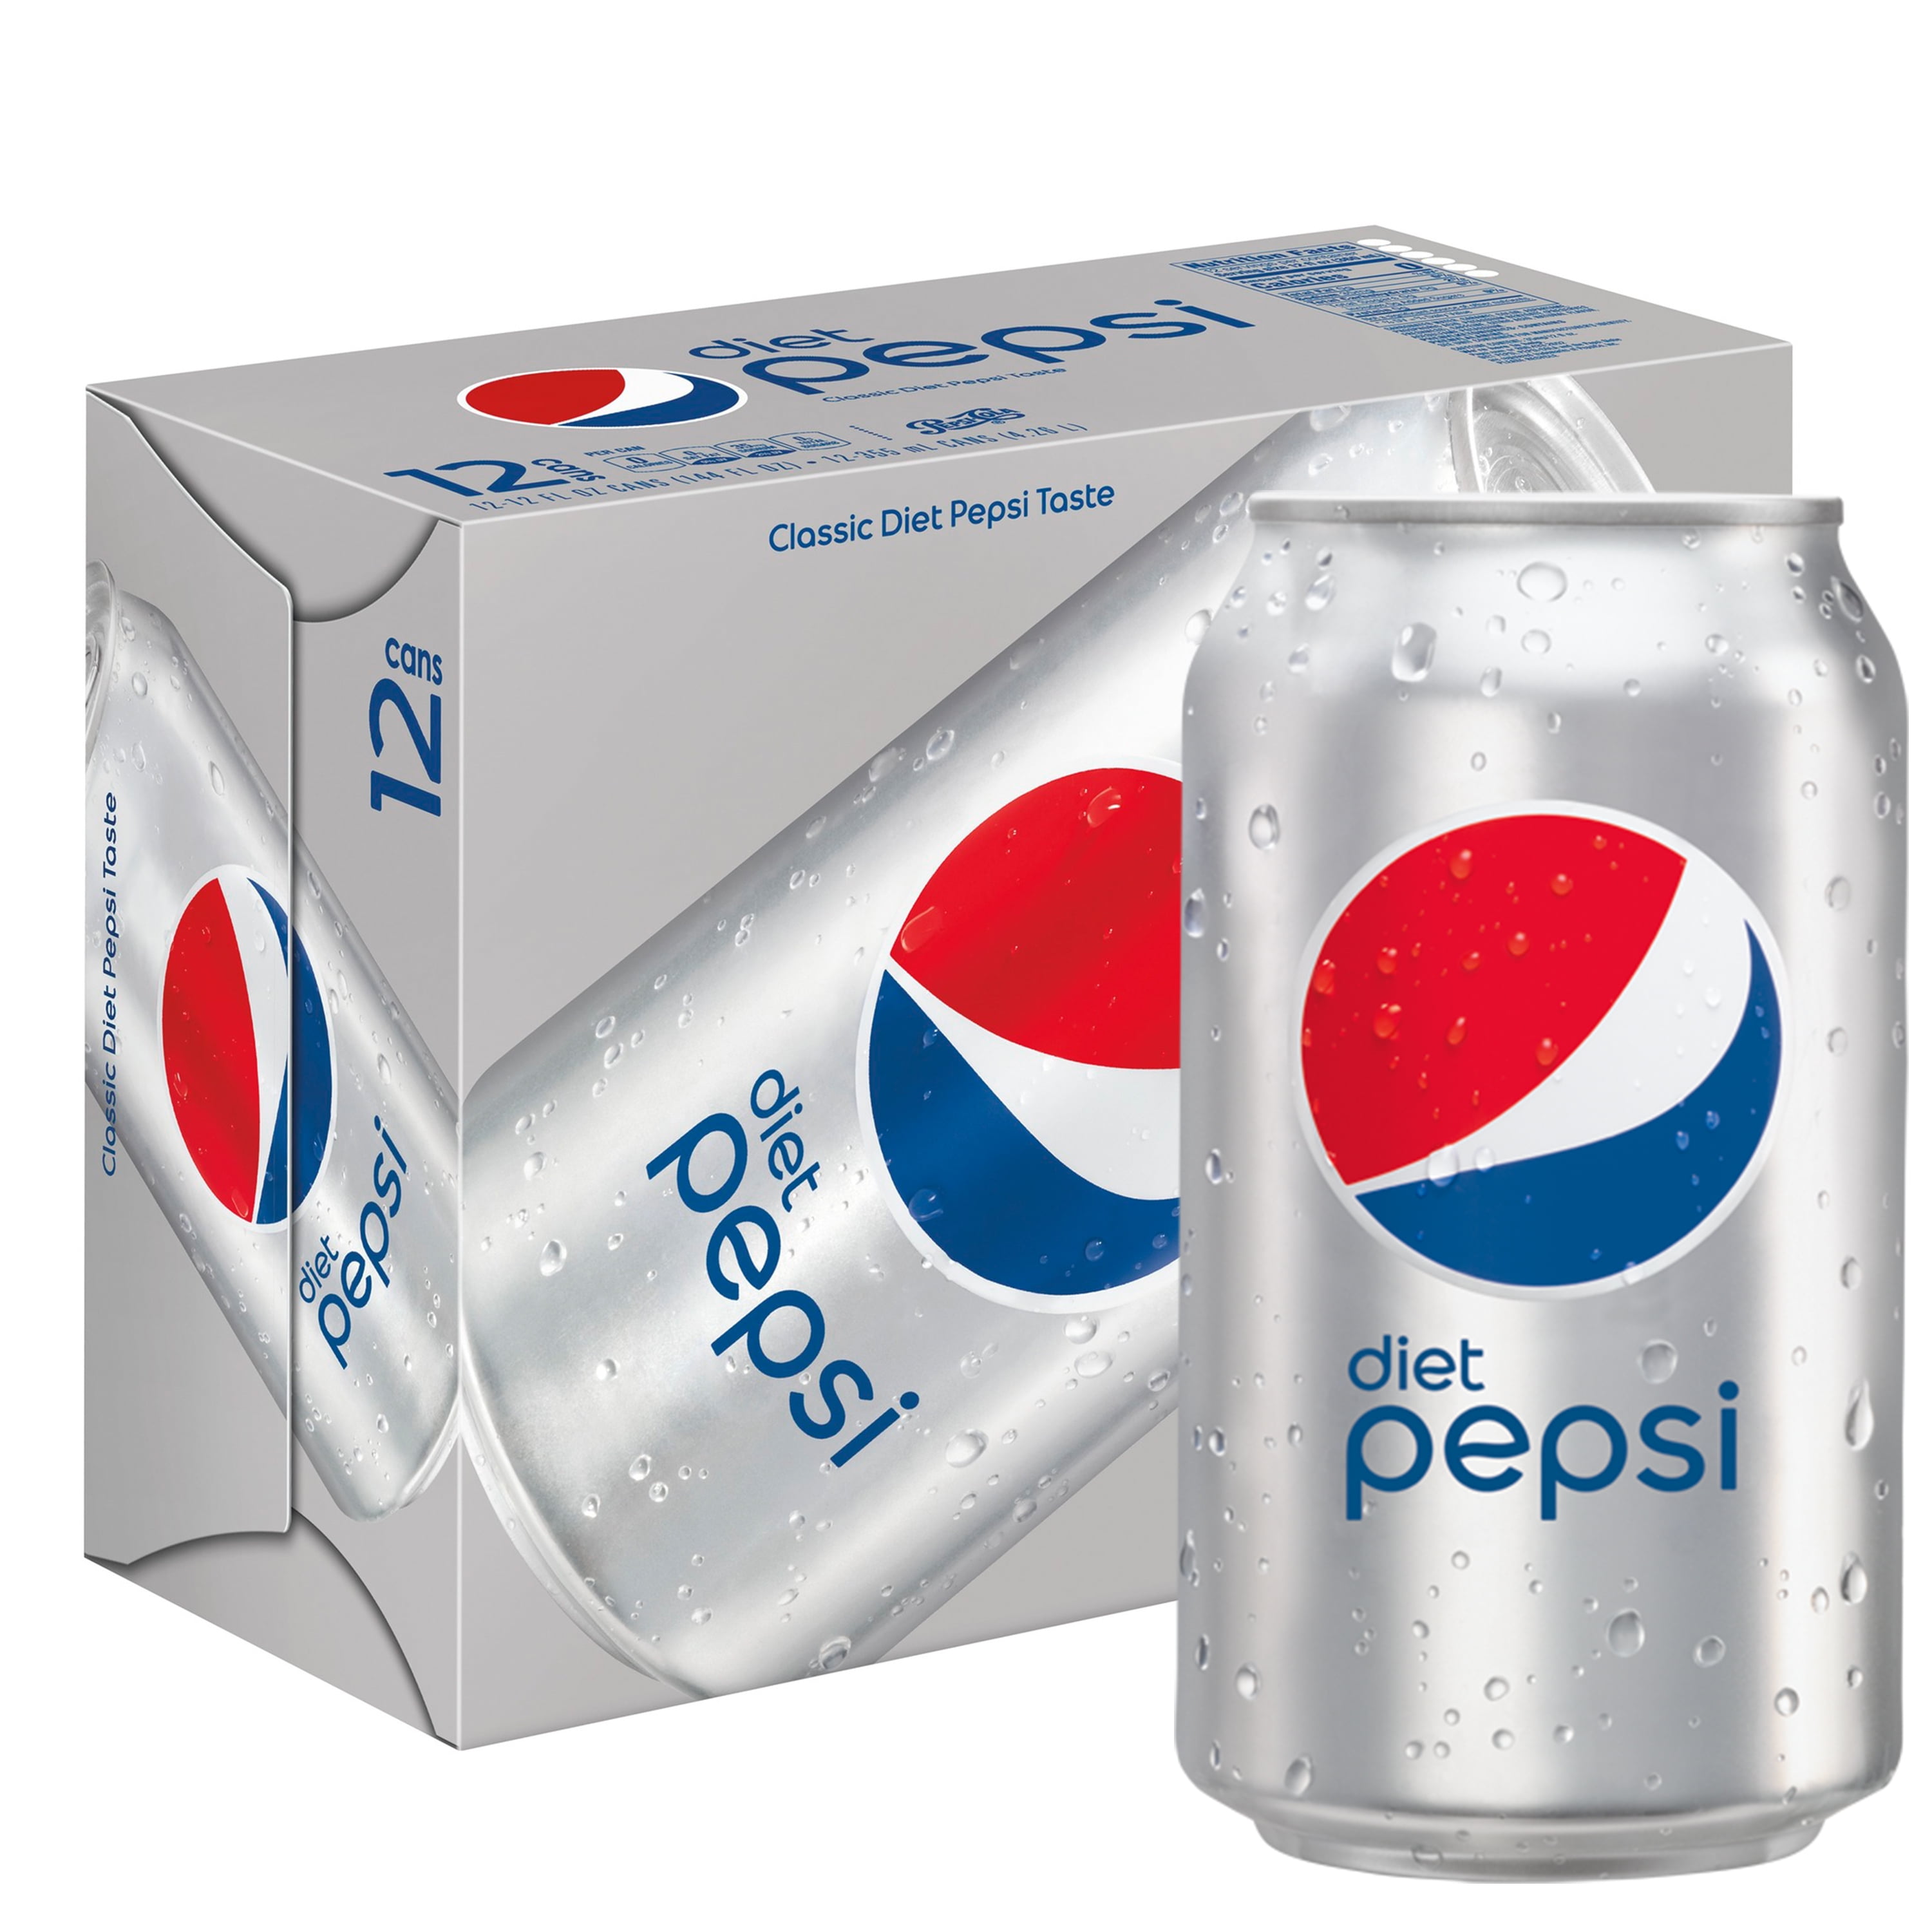 Diet Pepsi Soda Pop, Light Crisp, 12 fl oz, 12 Pack Cans - Walmart.com